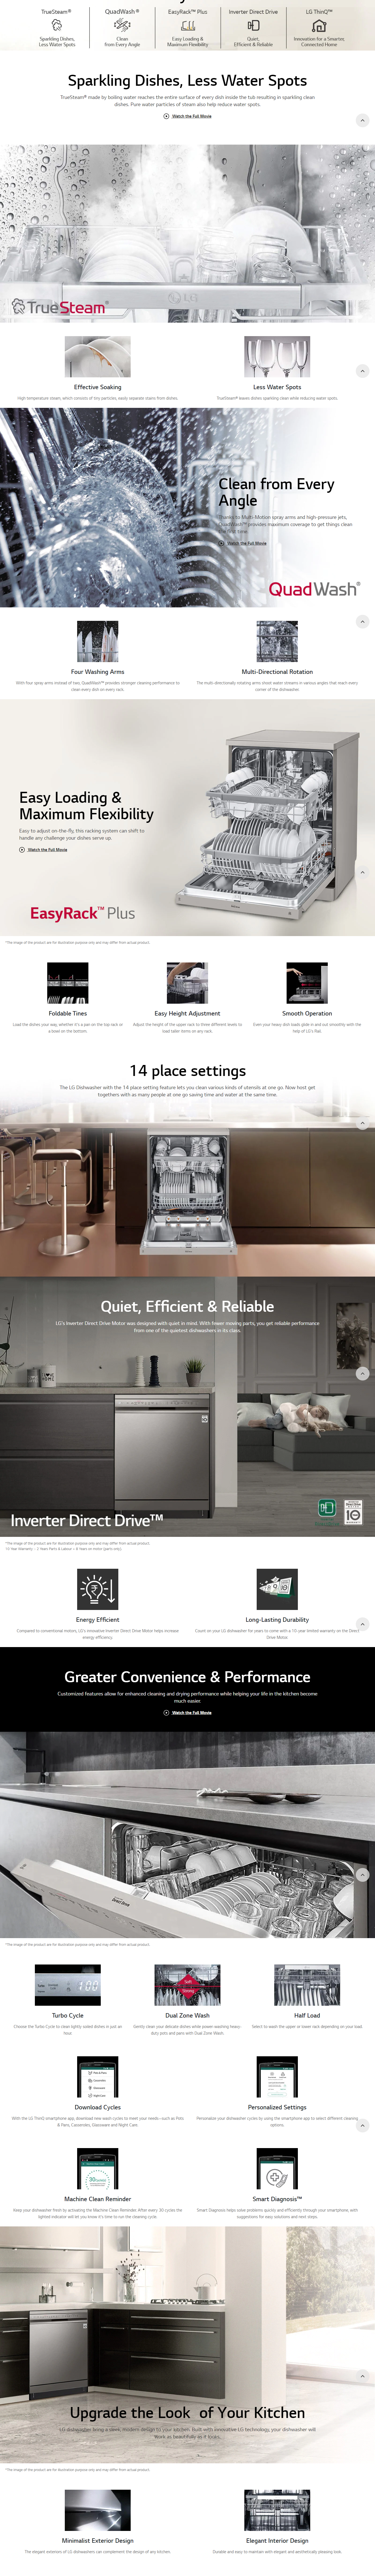 LG Dishwasher with TrueSteam, QuadWash, Inverter Direct Drive Technology (DFB532FP)